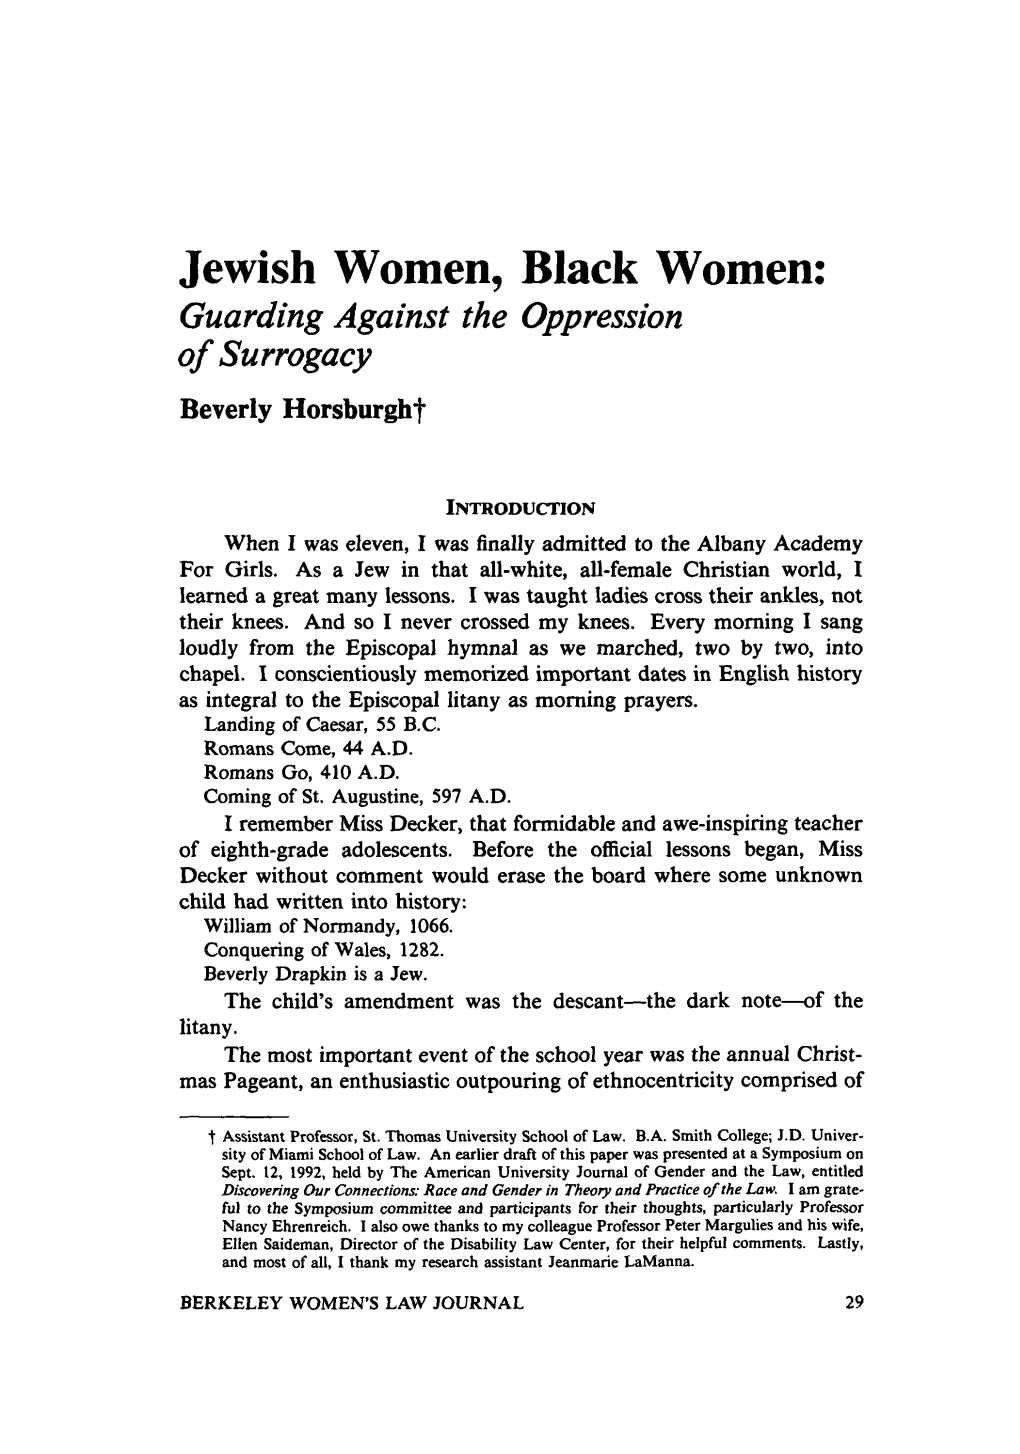 Jewish Women, Black Women: Guarding Against the Oppression of Surrogacy Beverly Horsburght